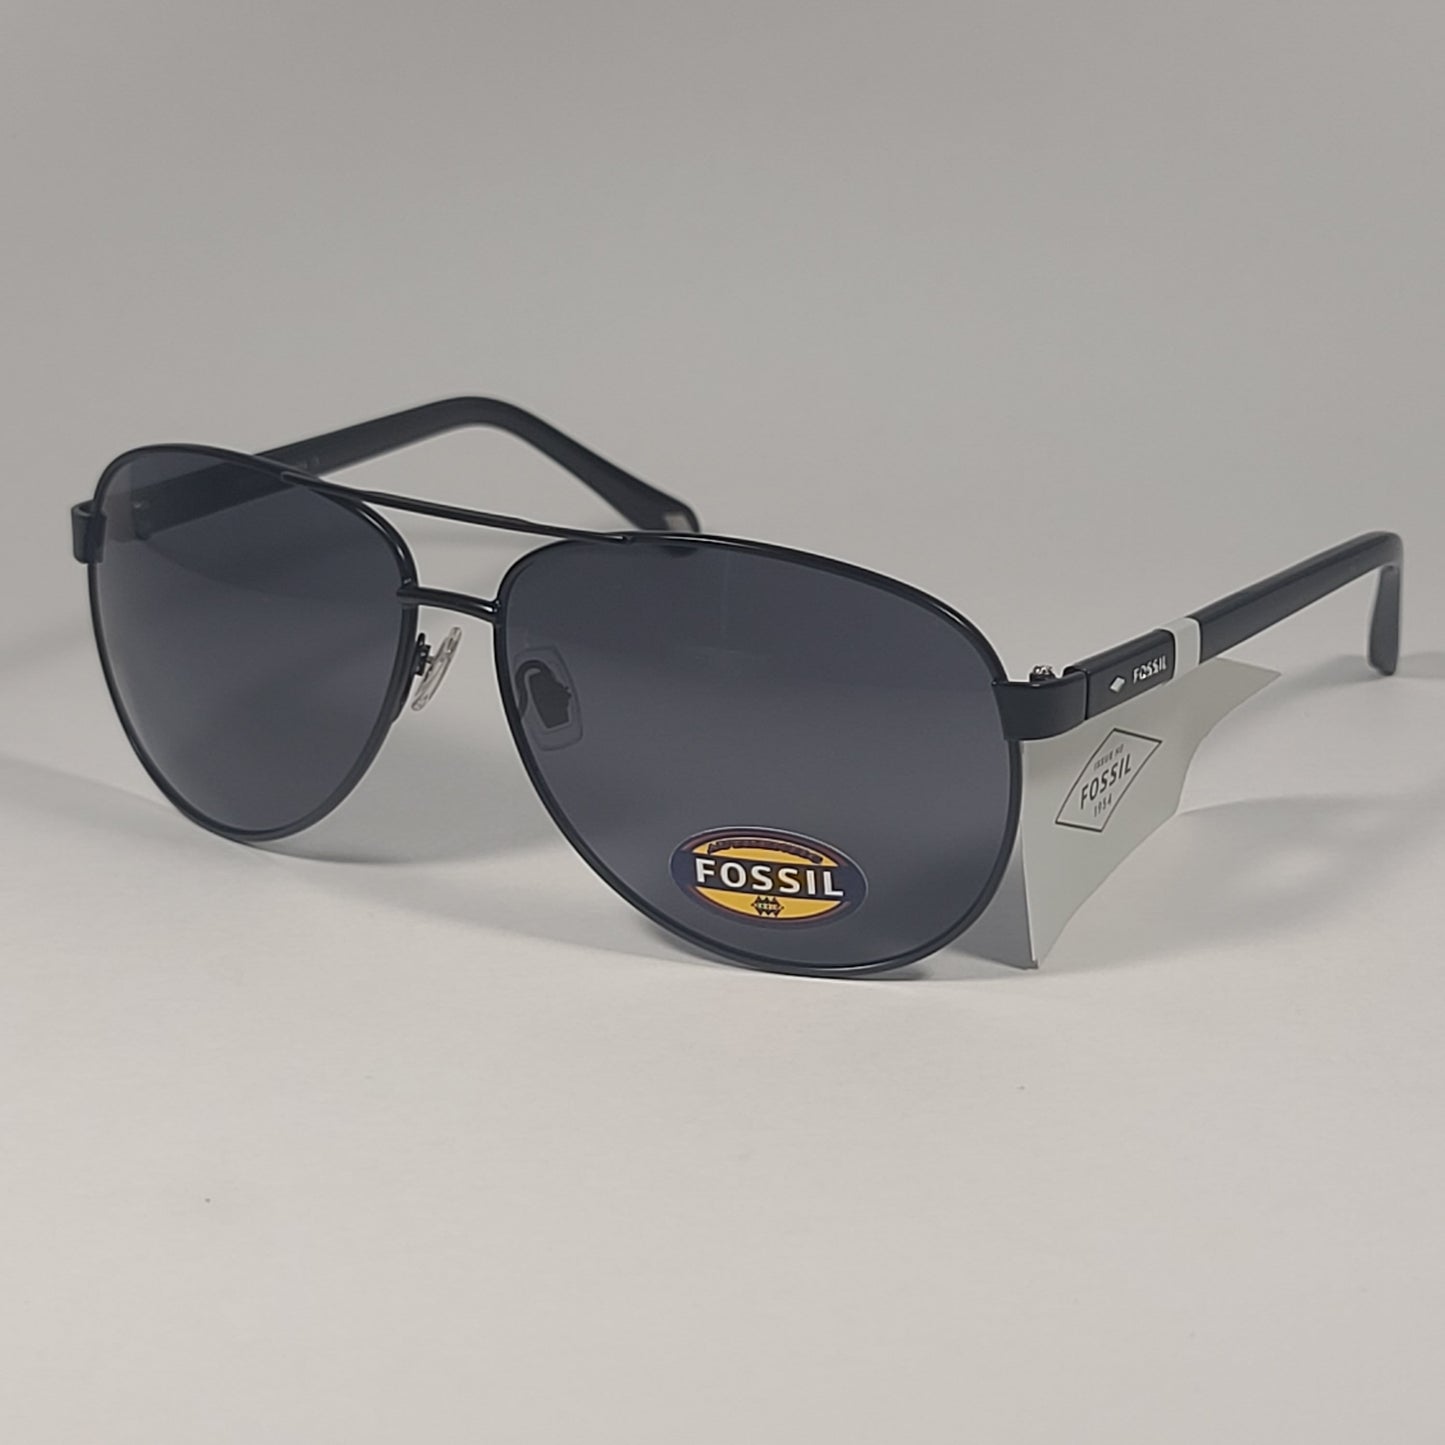 Fossil FM117 Aviator Pilot Style Sunglasses Shiny Black Frame Gray Tinted Lens - Sunglasses